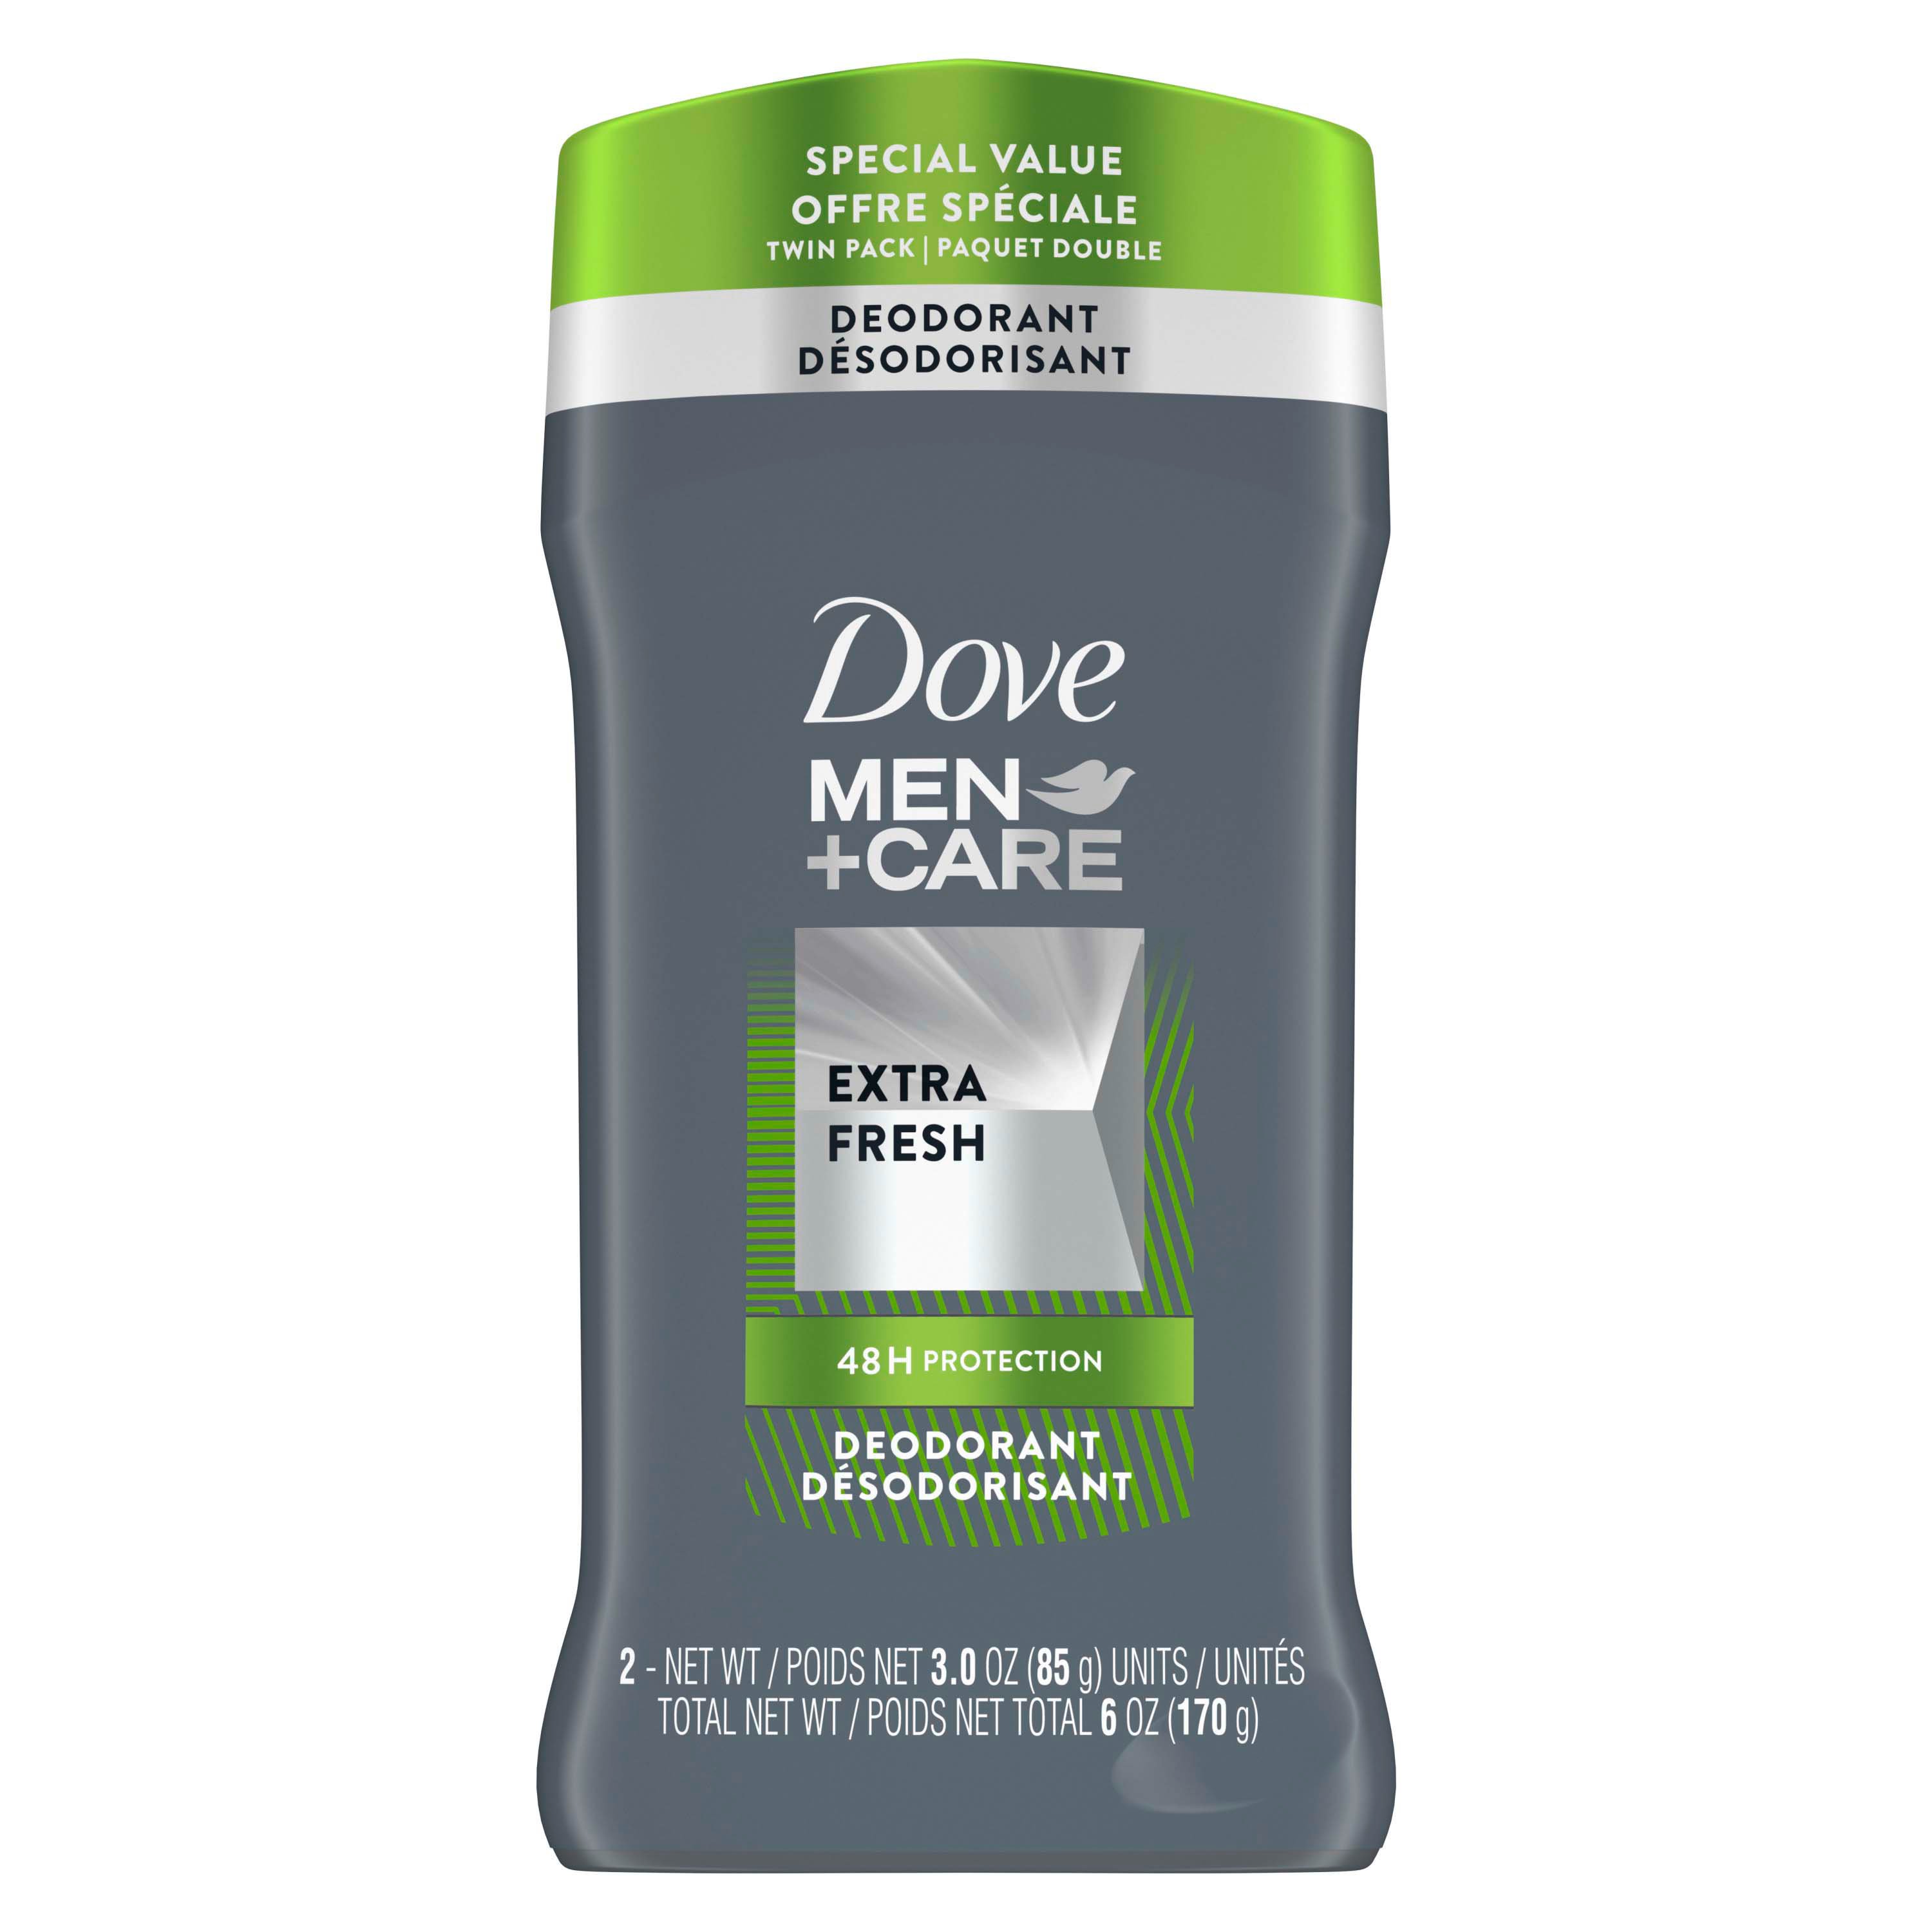 Dove Men+Care Extra Fresh Deodorant Stick, Twin Pack - Shop Deodorant ...